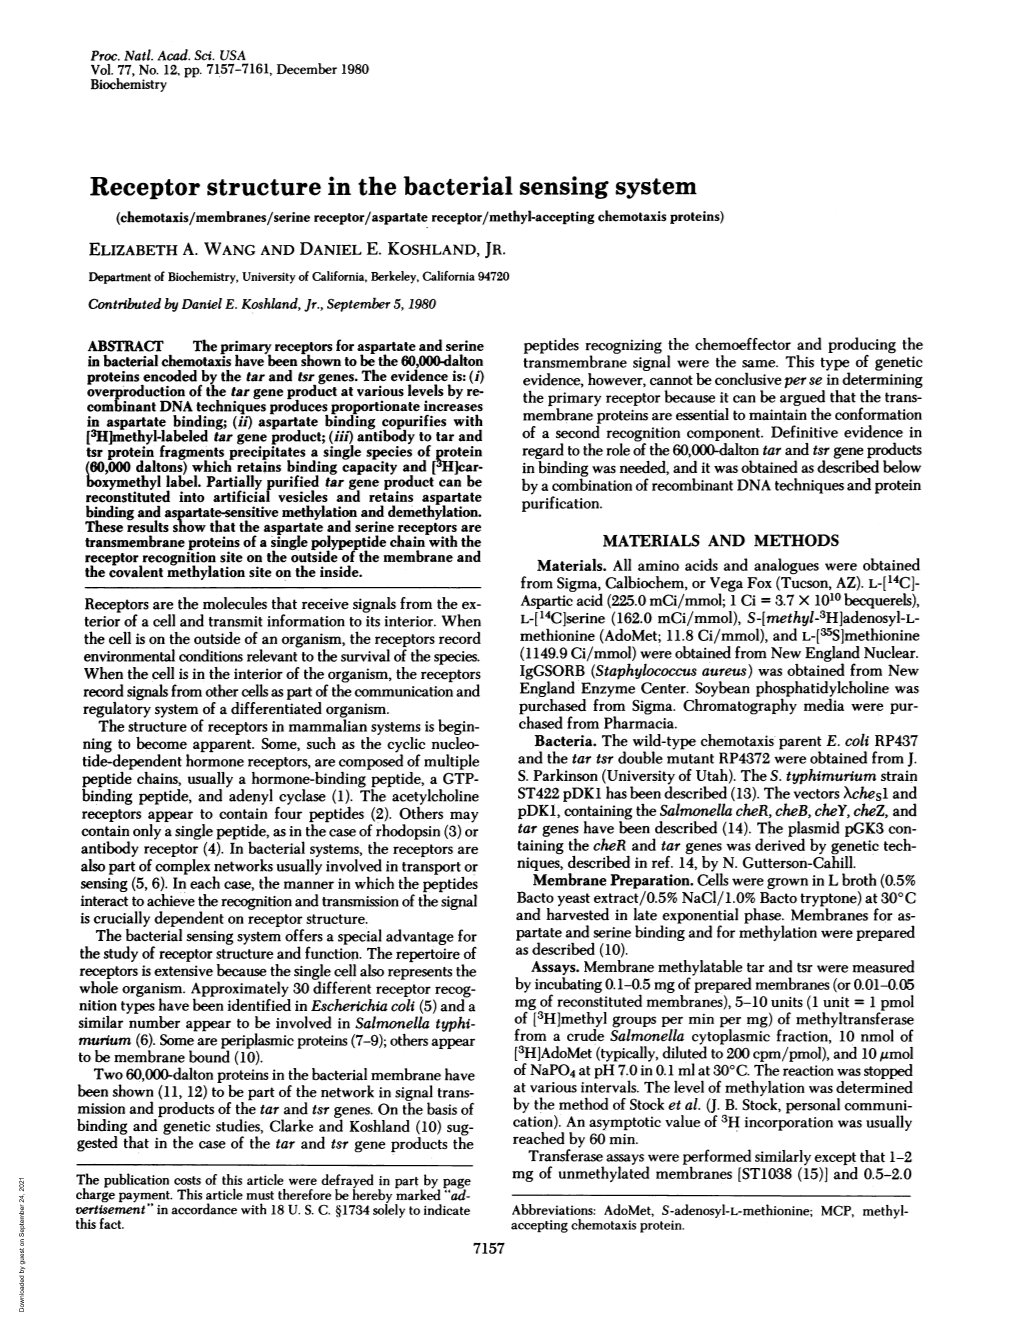 Receptor Structure in the Bacterial Sensing System (Chemotaxis/Membranes/Serine Receptor/Aspartate Receptor/Methyl-Accepting Chemotaxis Proteins) ELIZABETH A